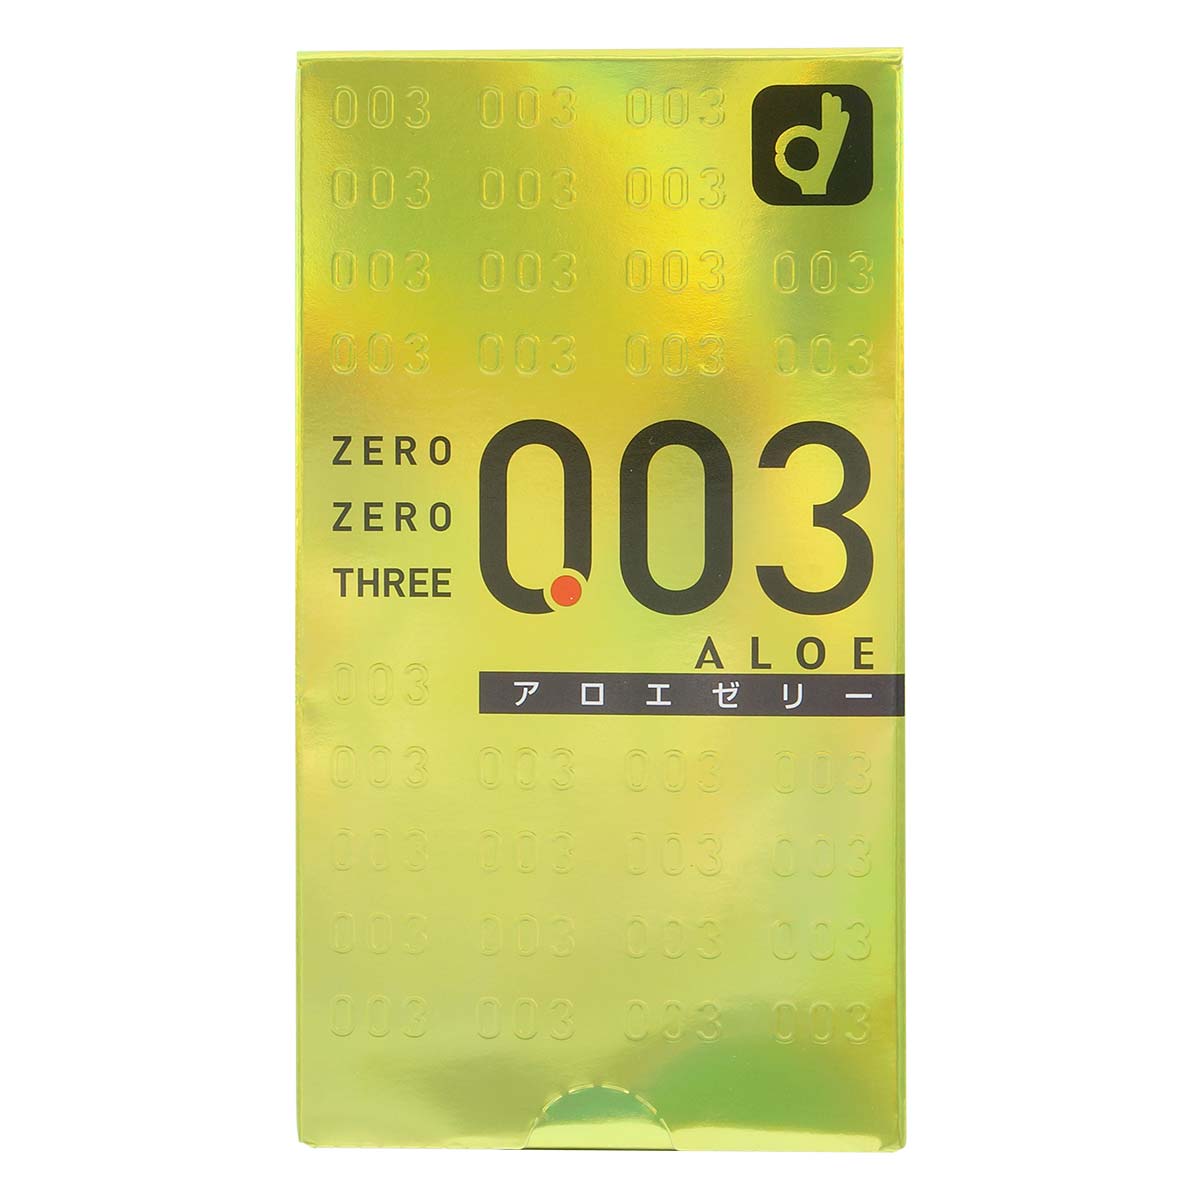 Zero Zero Three 0.03 Aloe (Japan Edition) 10's Pack Latex Condom (Short Expiry)-p_2